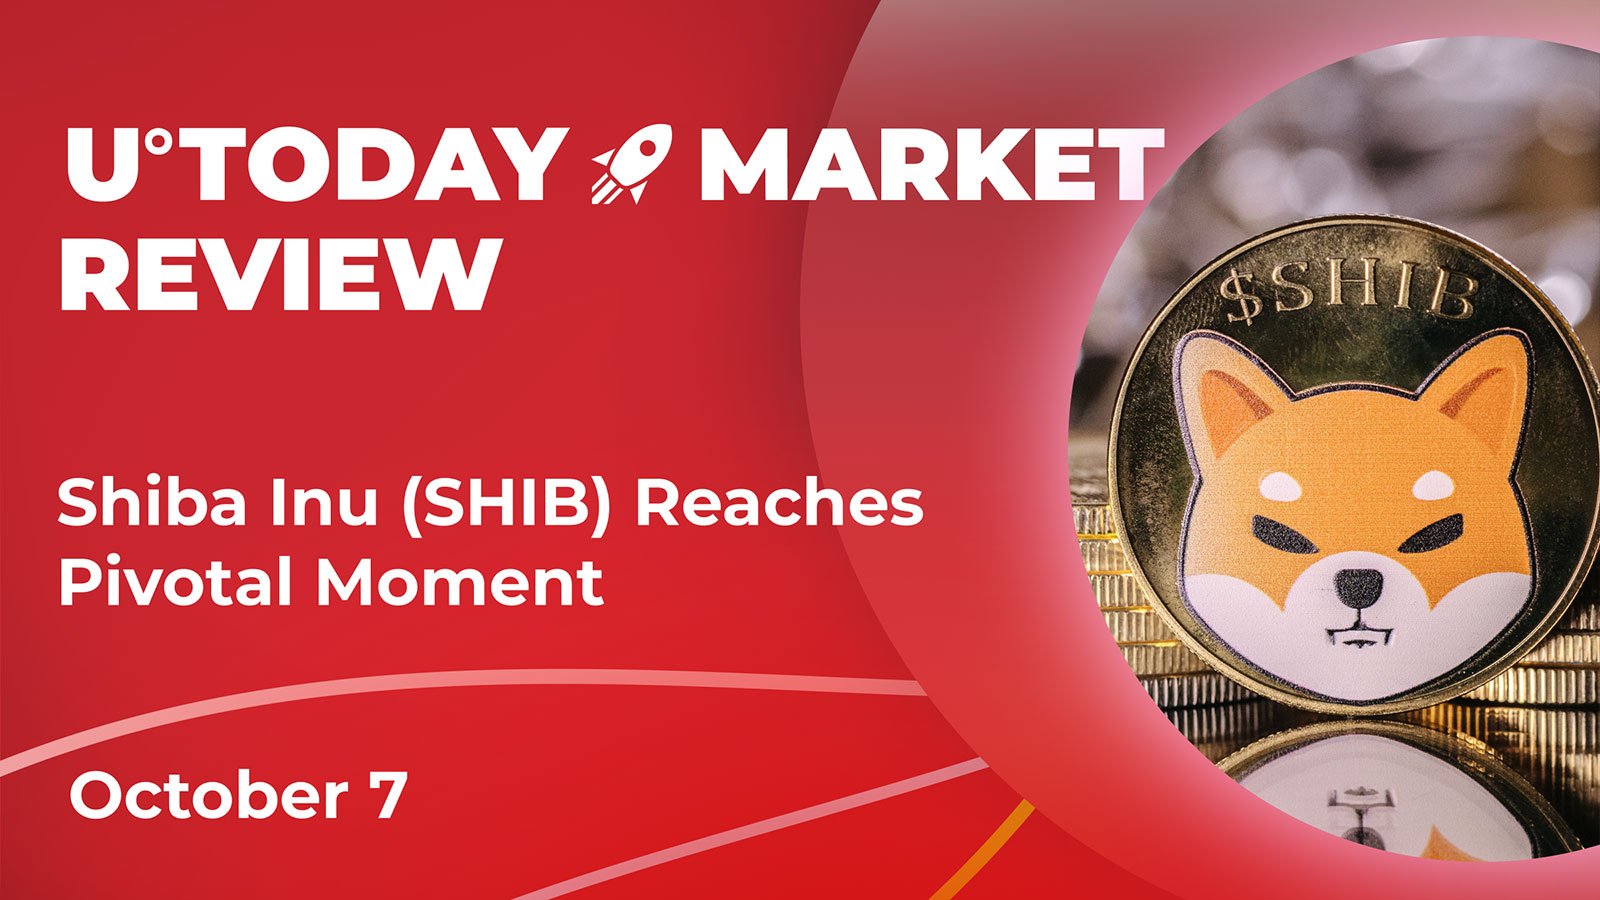 Shiba Inu (SHIB) Reaches Pivotal Moment: Crypto Market Review, October 7